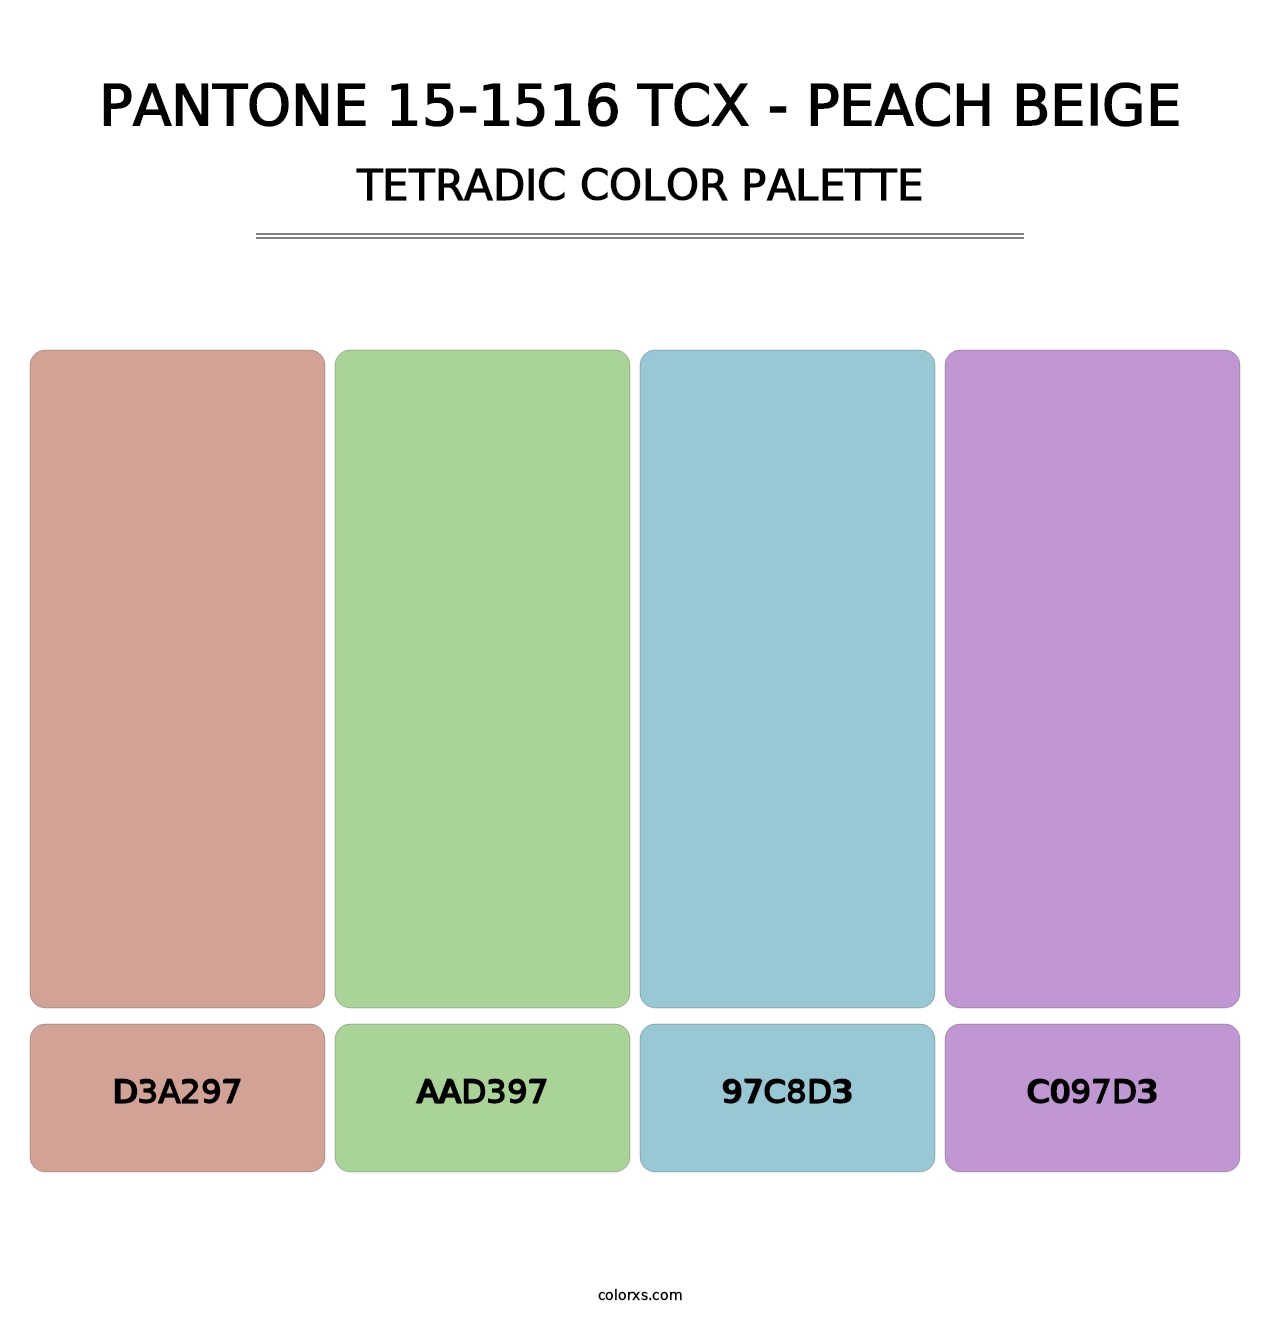 PANTONE 15-1516 TCX - Peach Beige - Tetradic Color Palette